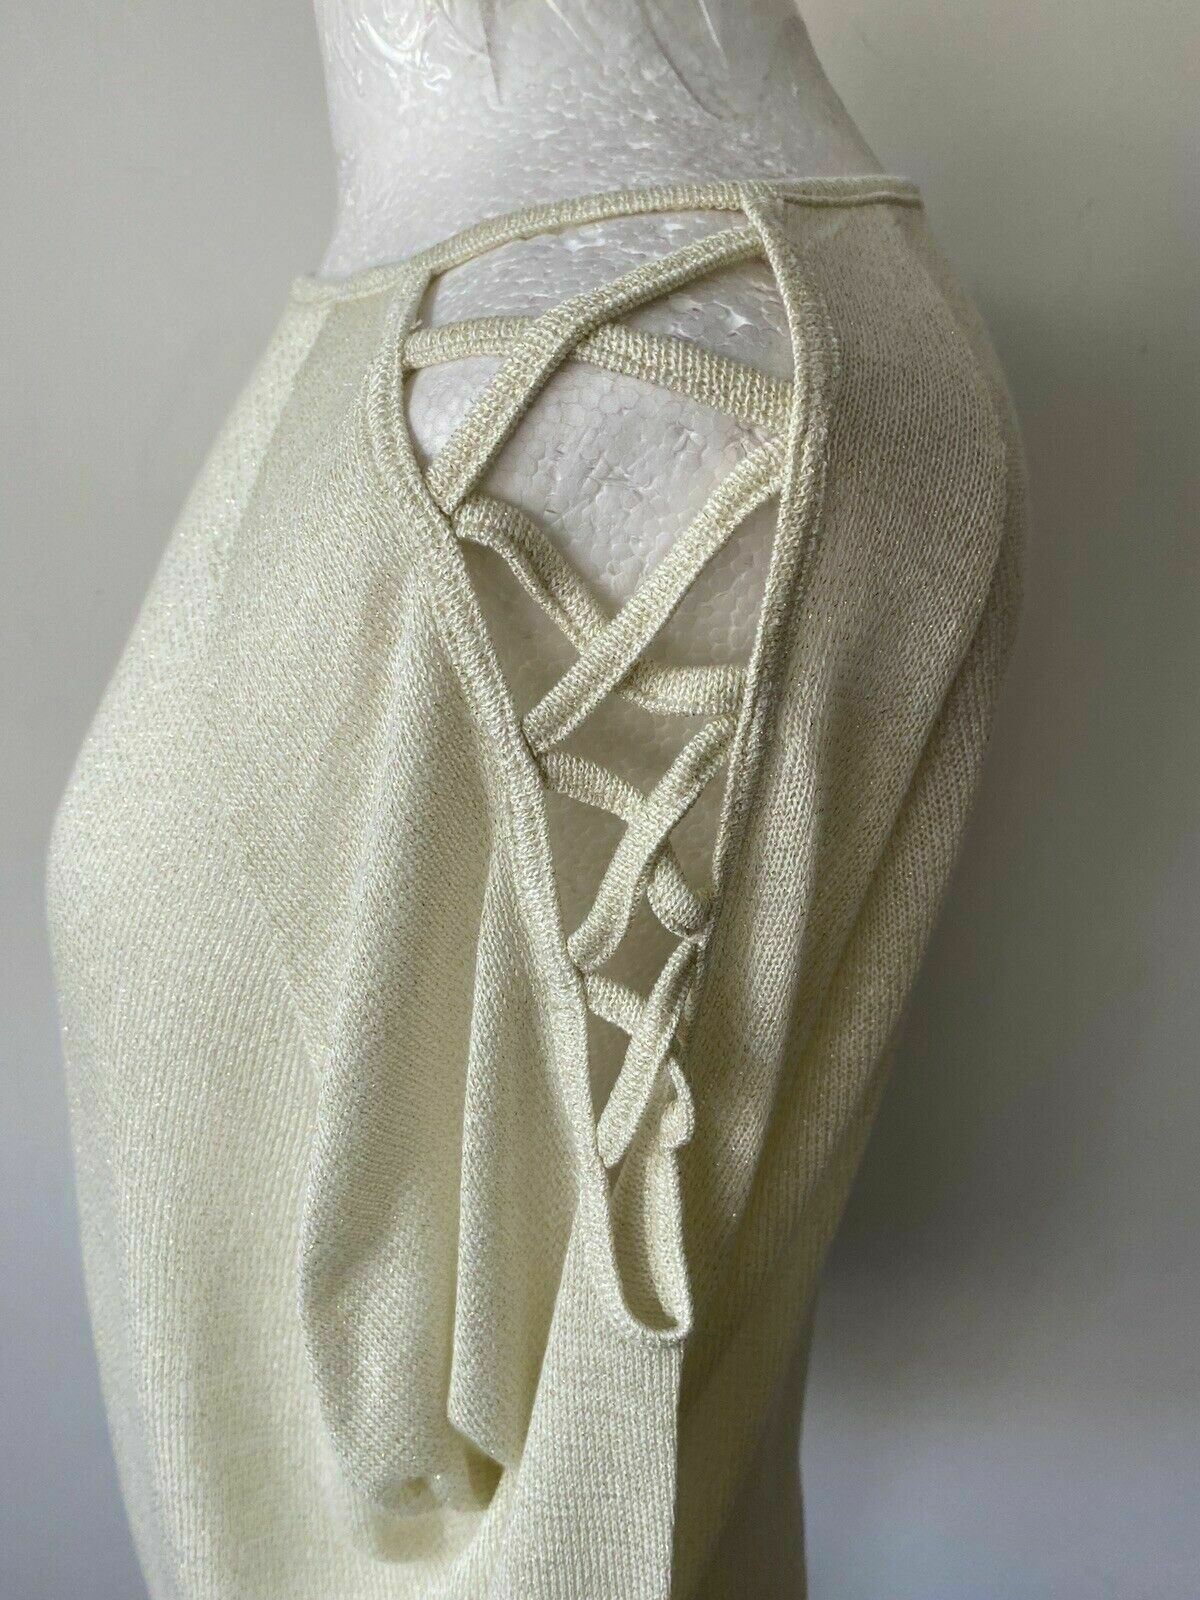 Avon Gold Metallic Knit Top Criss Cross Cold Shoulder Size 10 - 12 RRP £20